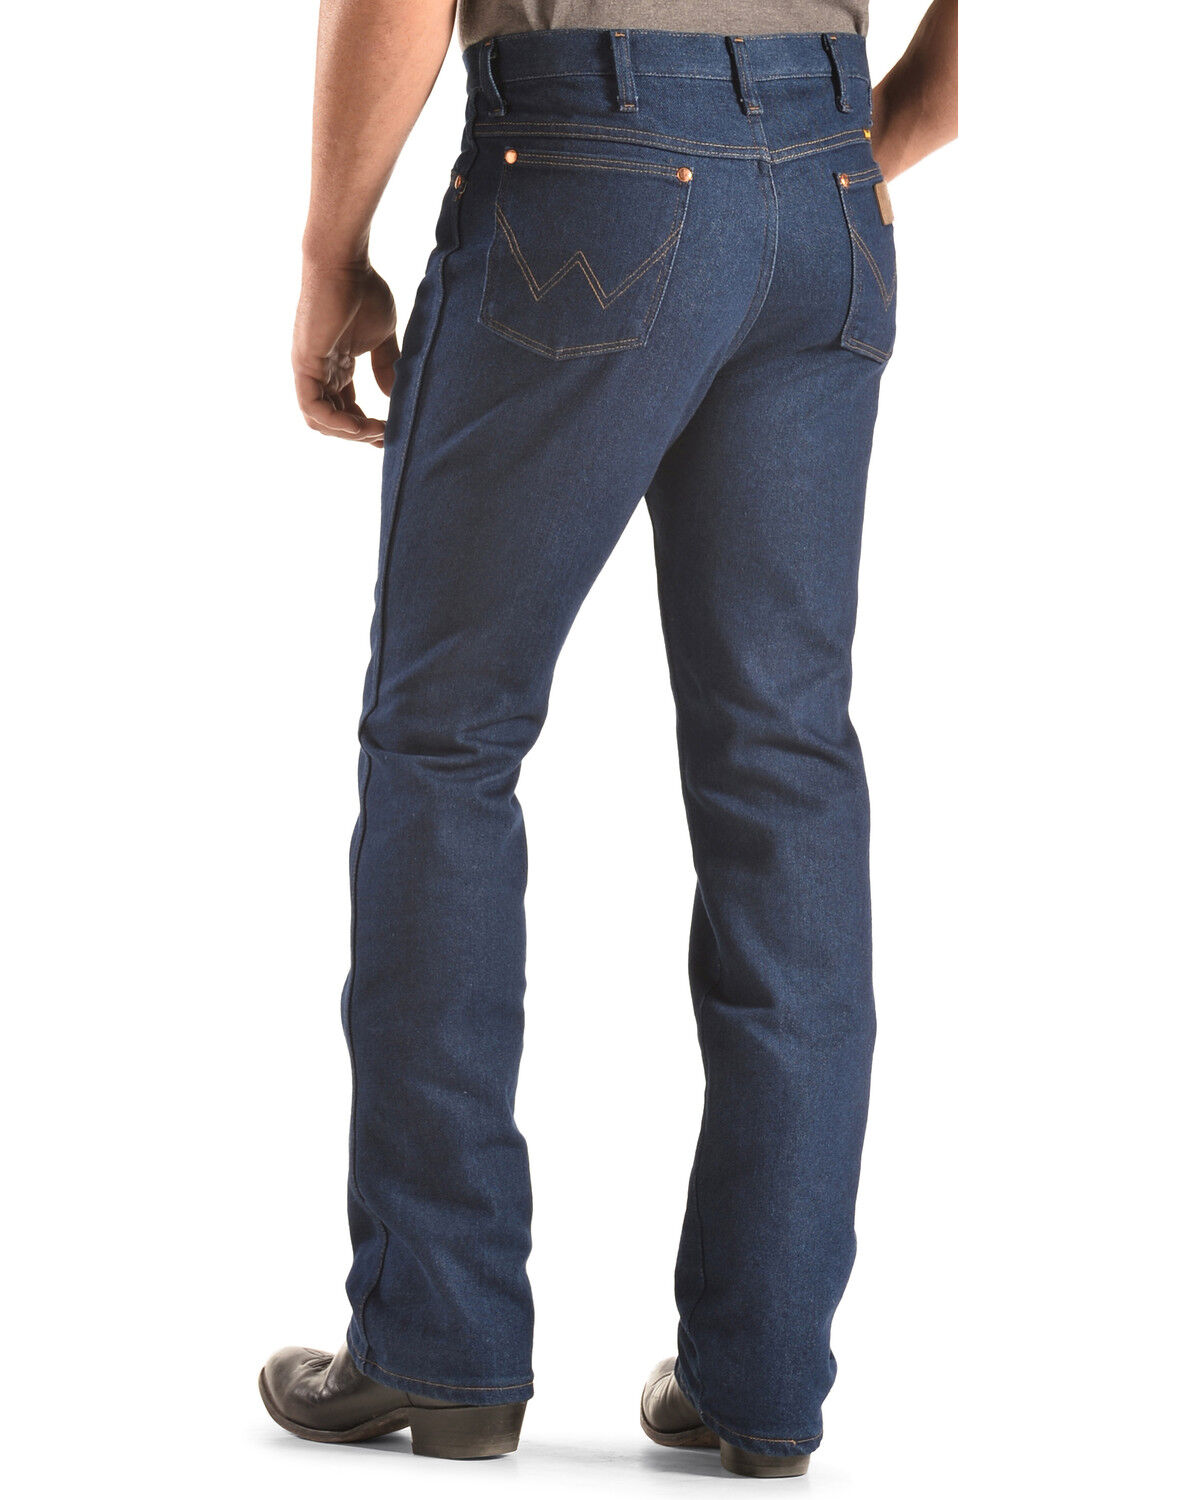 Wrangler Jeans Fit Chart